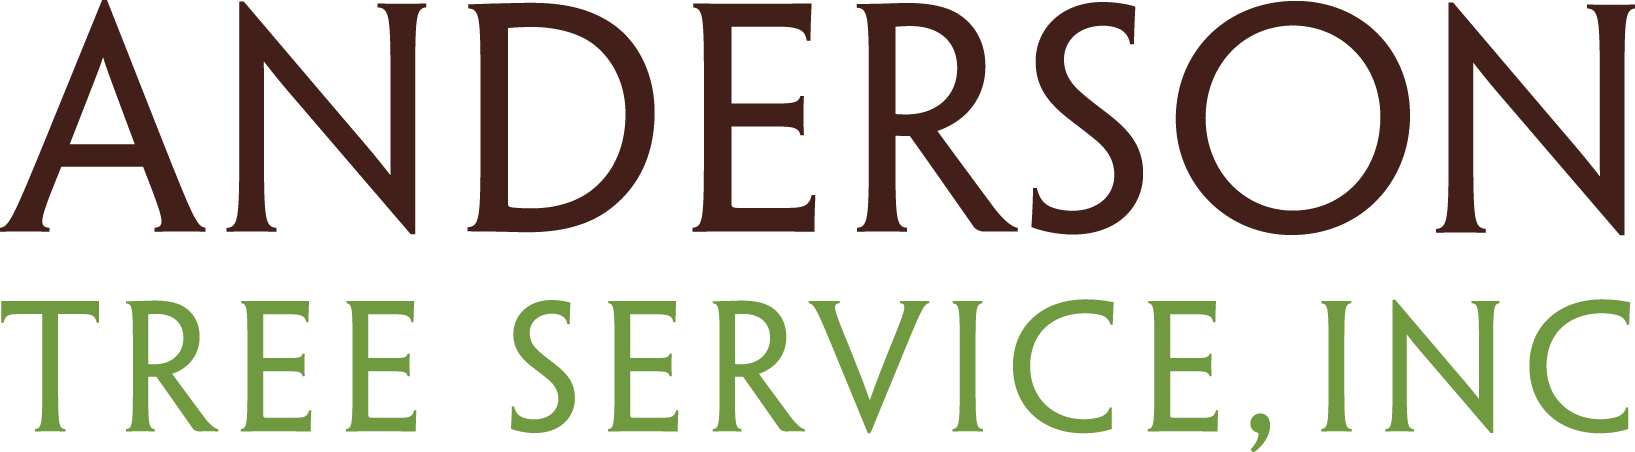 Anderson Tree Service, Inc.